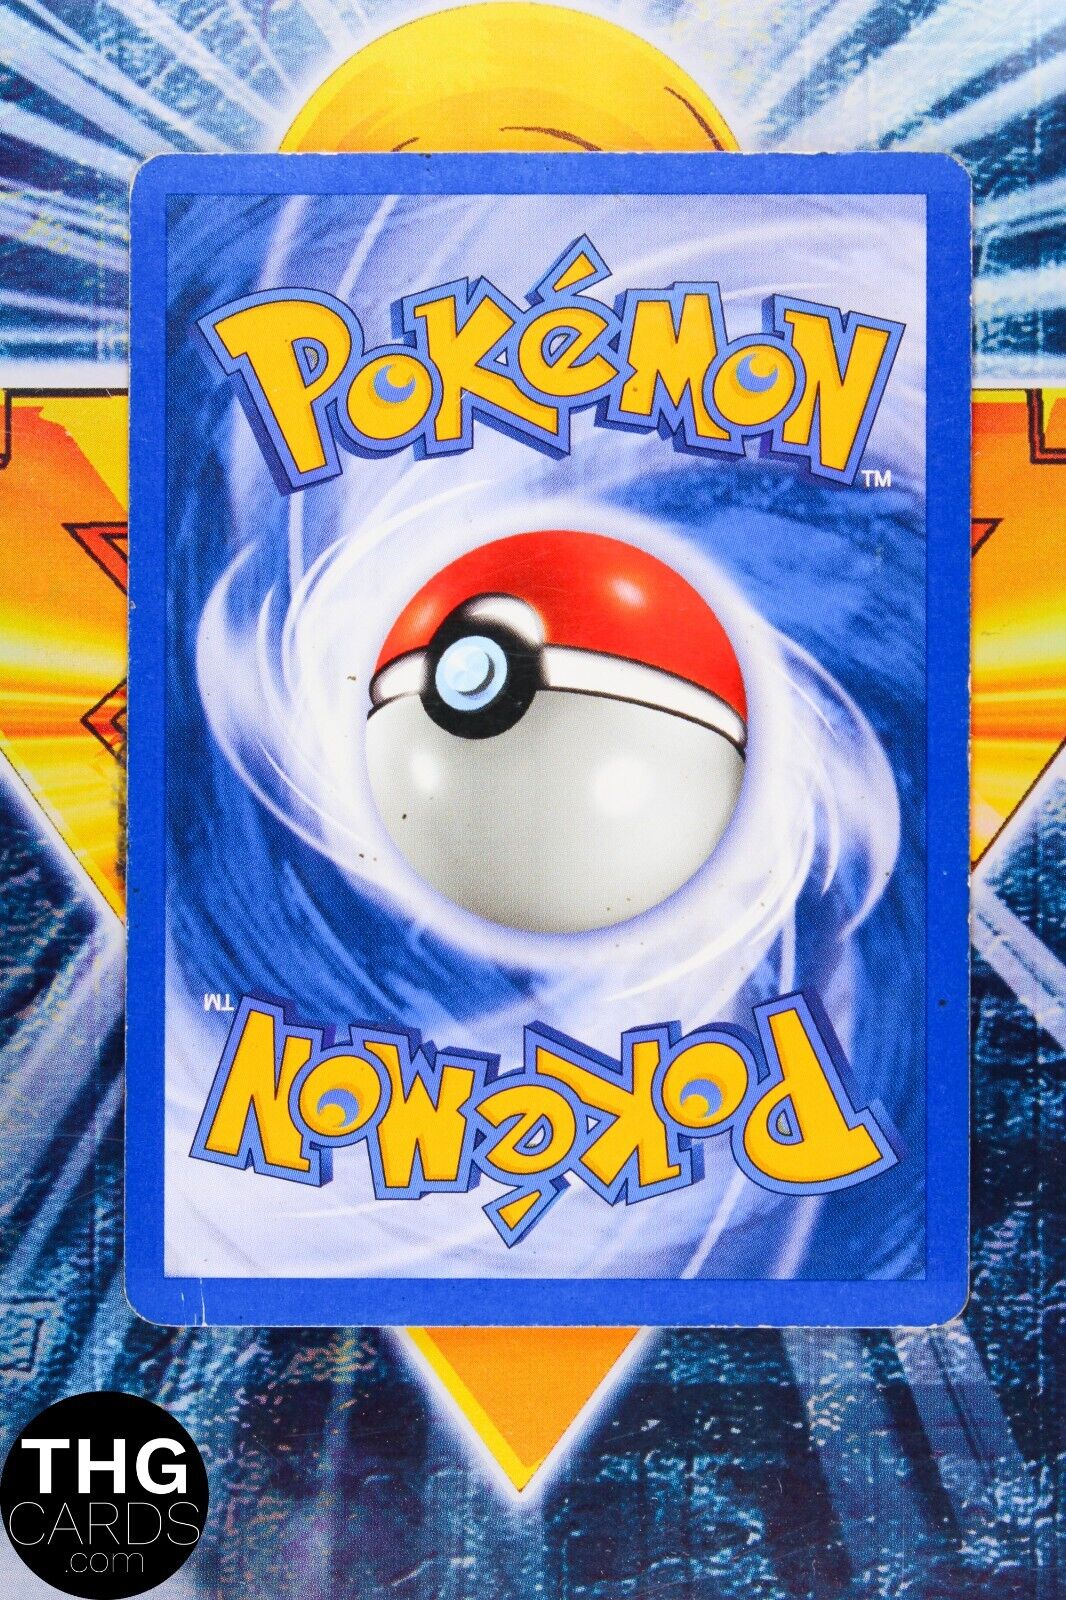 Magmar 40/111 Uncommon Neo Genesis Pokemon Card